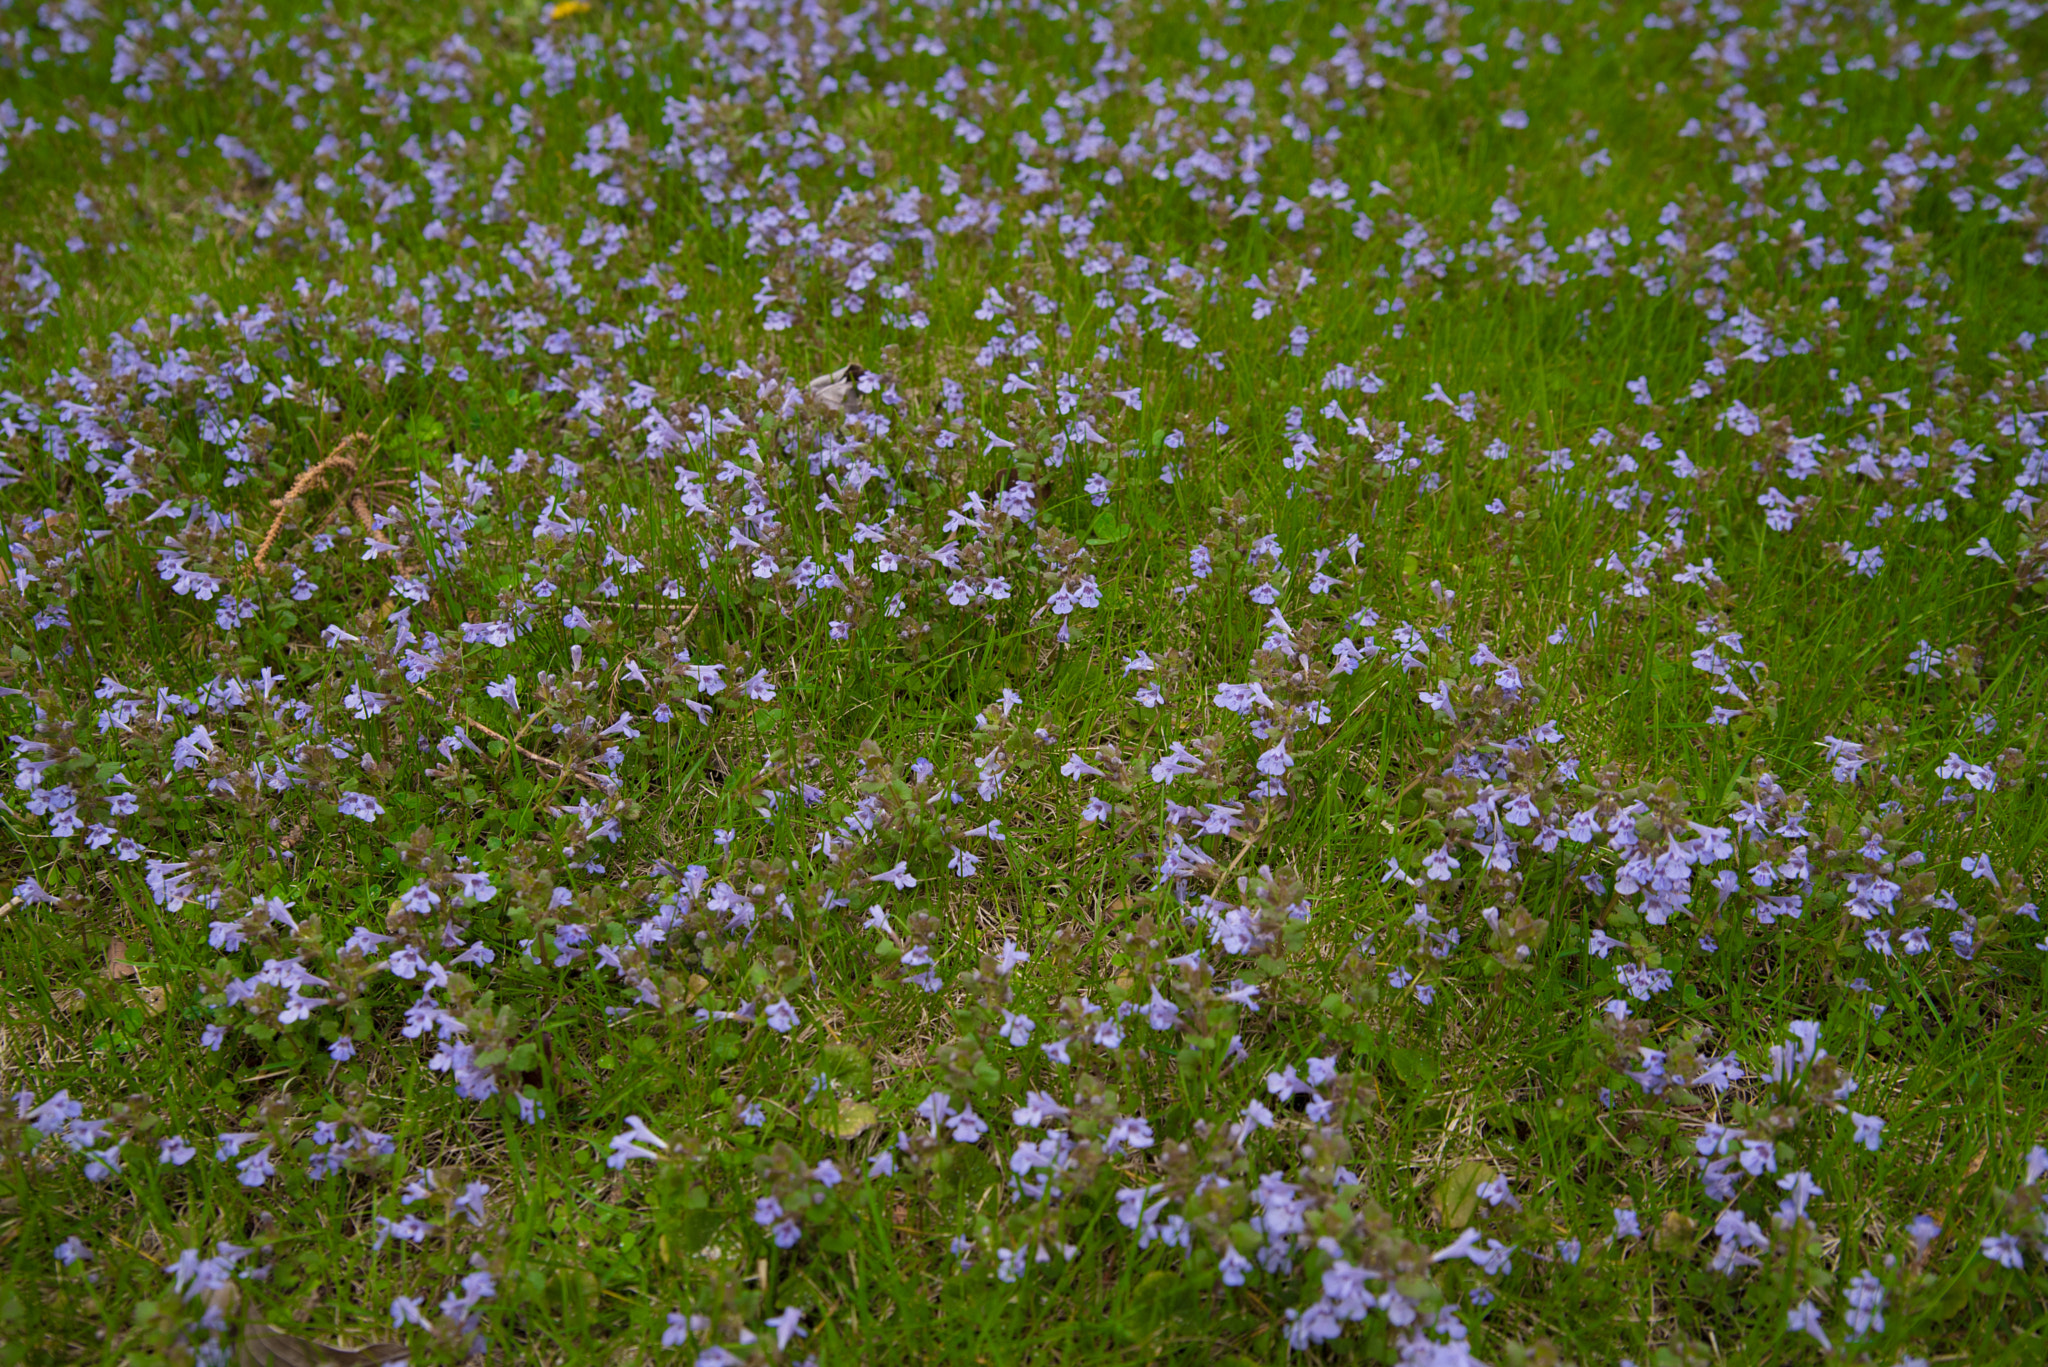 Flowers on a grass